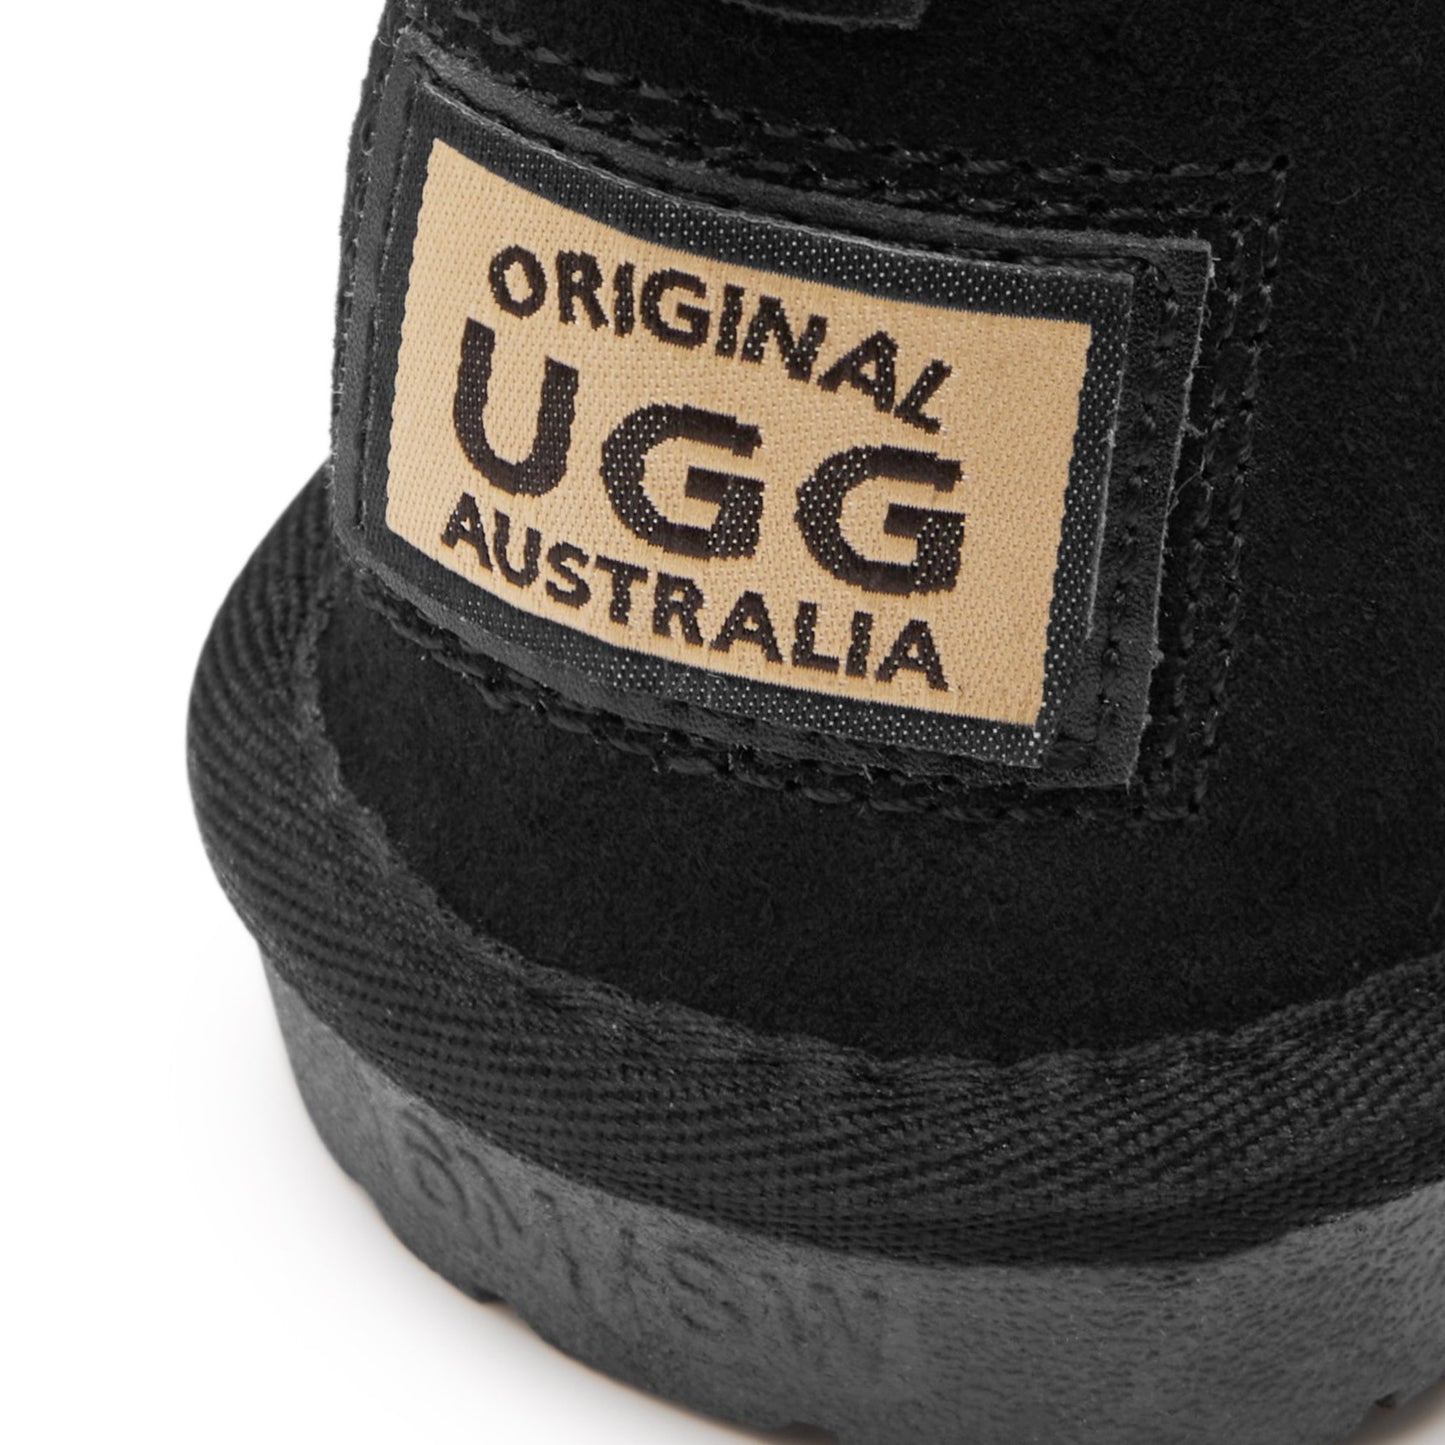 Originals Ugg Australia Long Button Boot Black